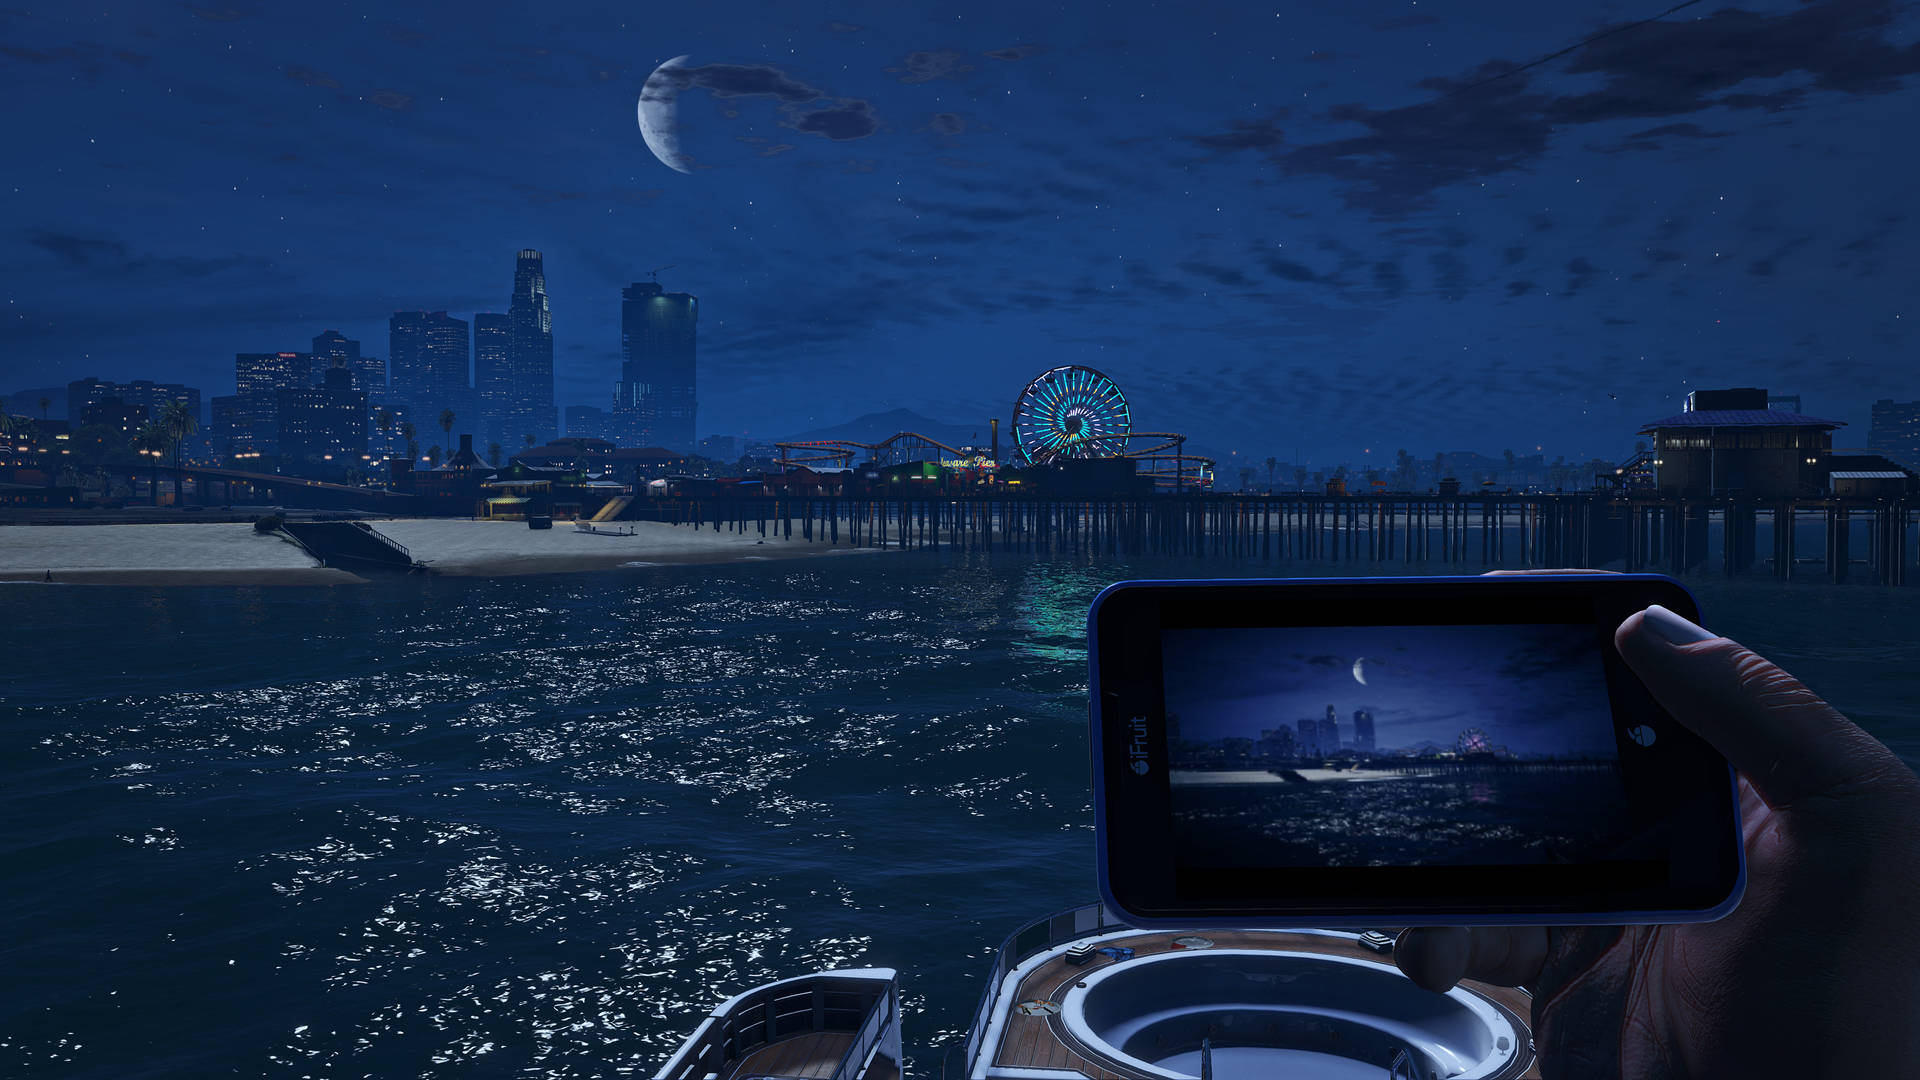 Grand Theft Auto V Del Perro Pier Scene Skrivebordsbaggrund Wallpaper